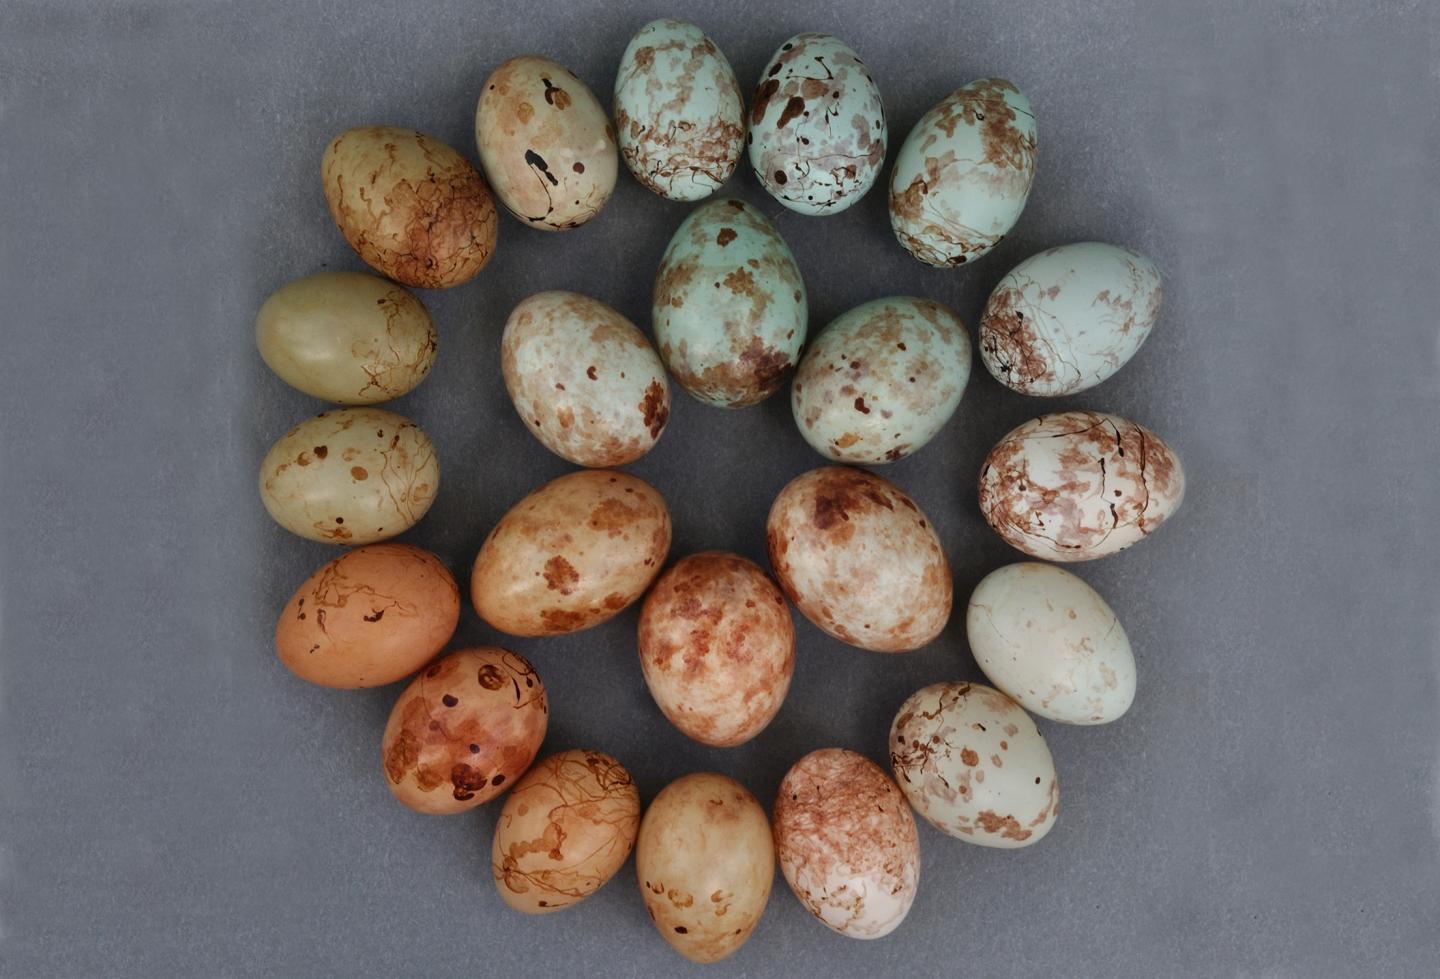 Cuckoo Eggs Disguised as Prinia Eggs